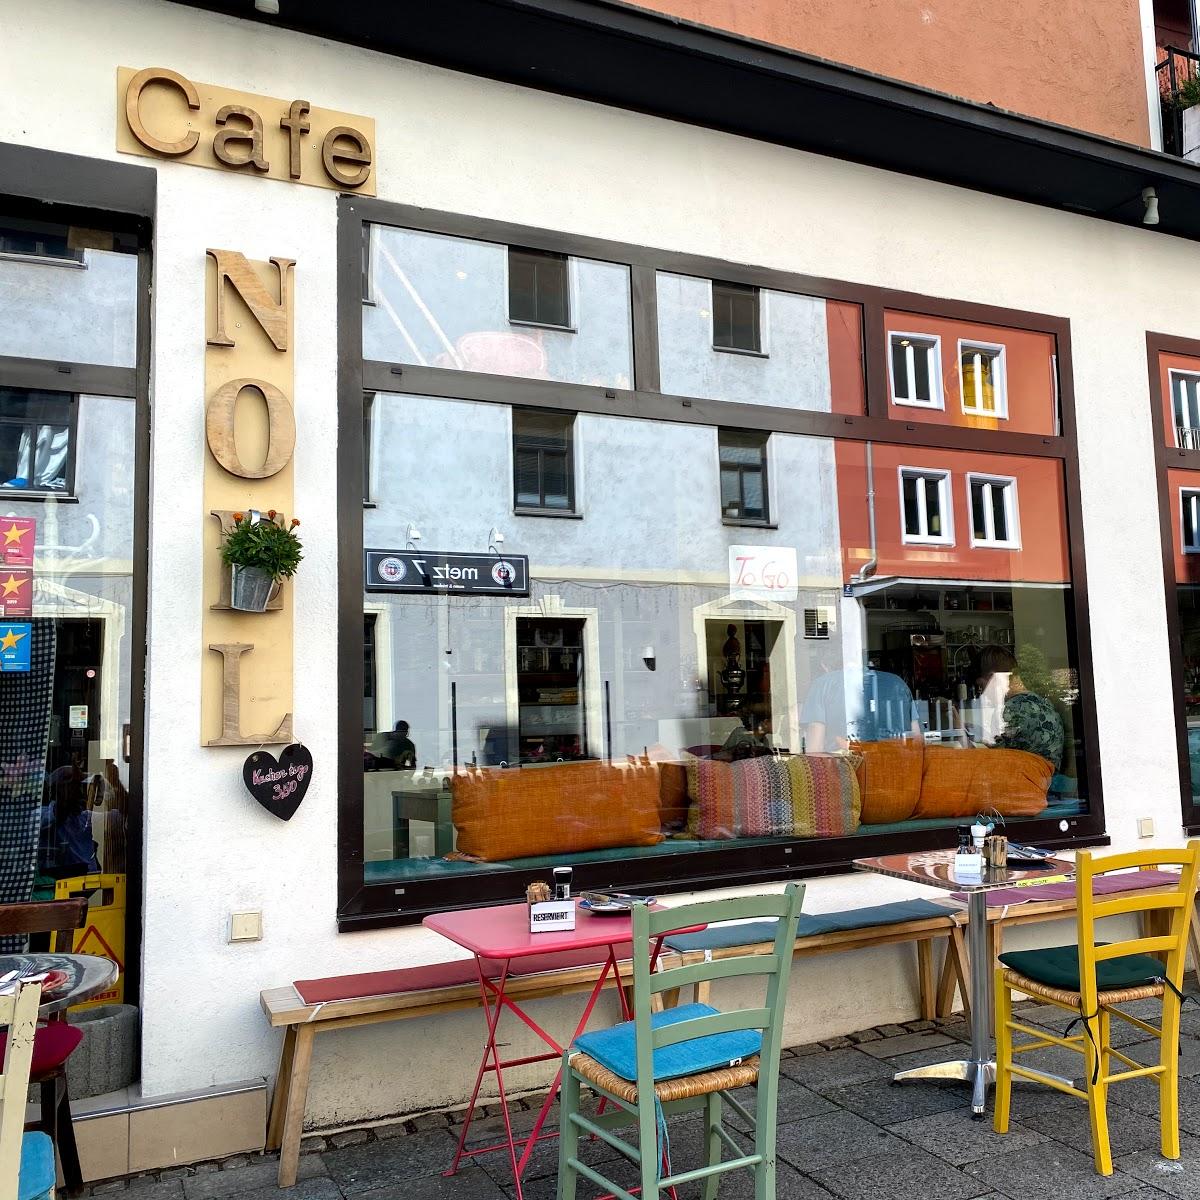 Restaurant "Café Noel" in München